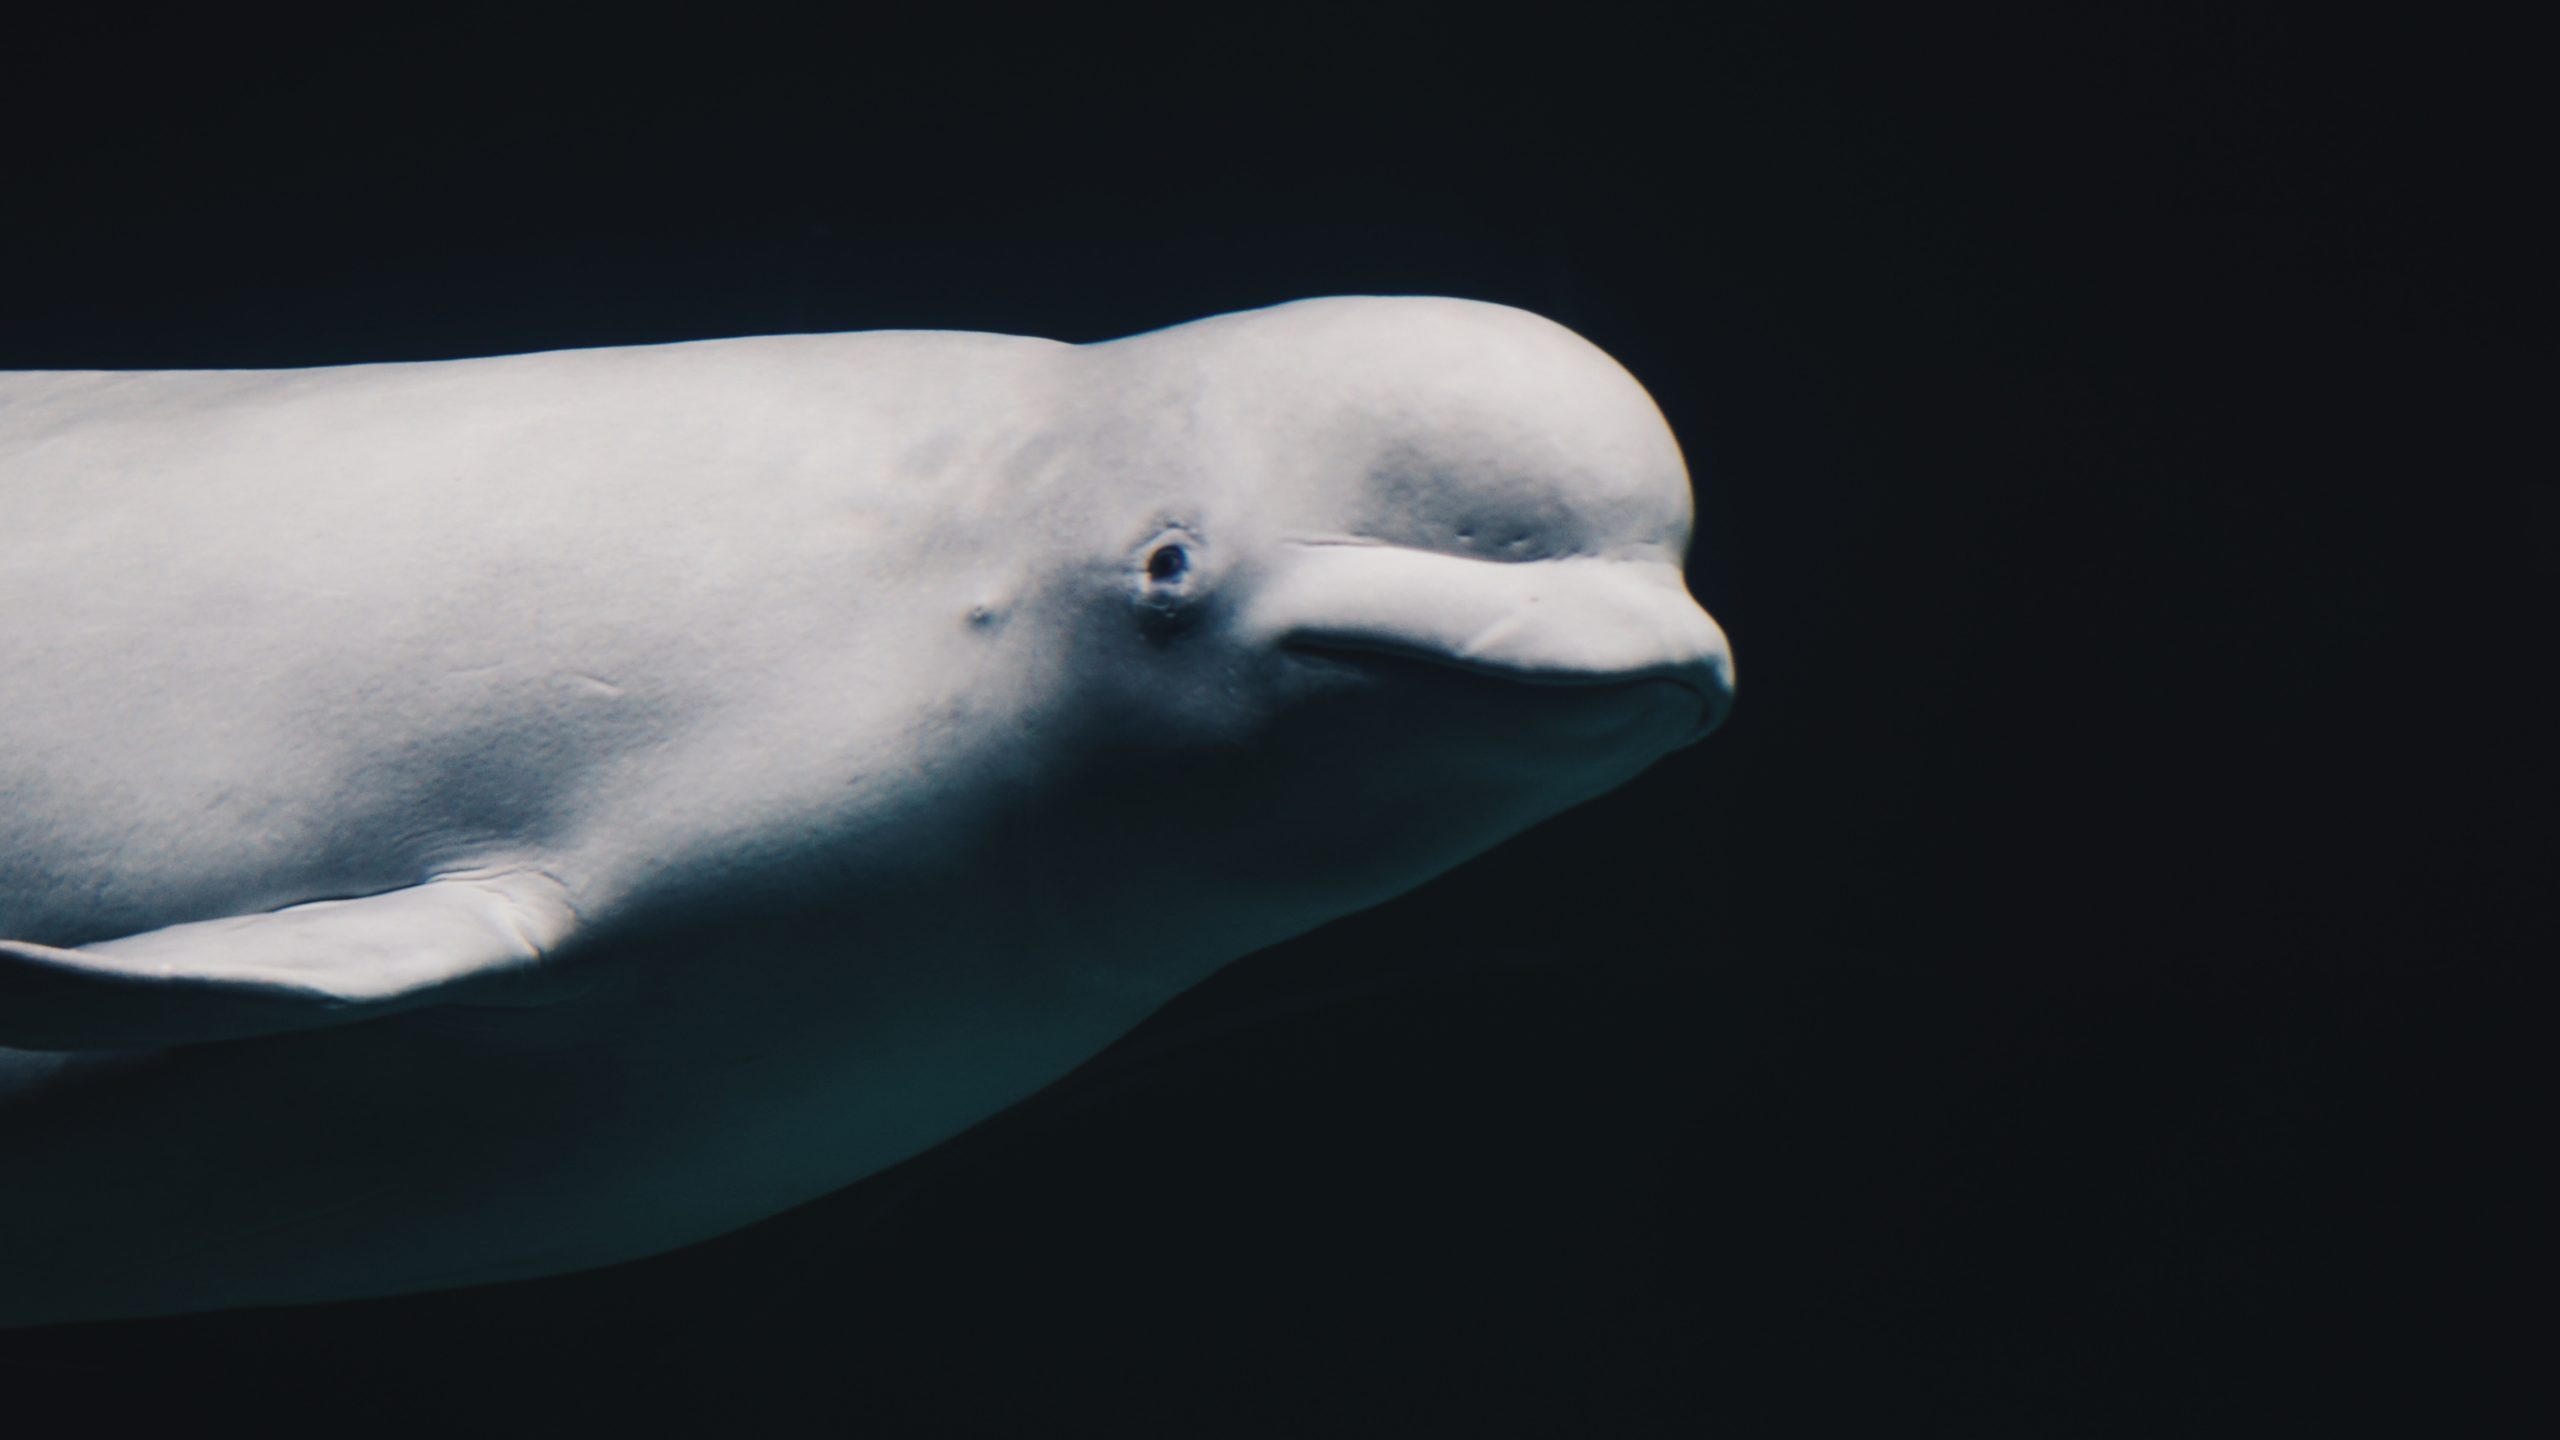 beluga whales mating